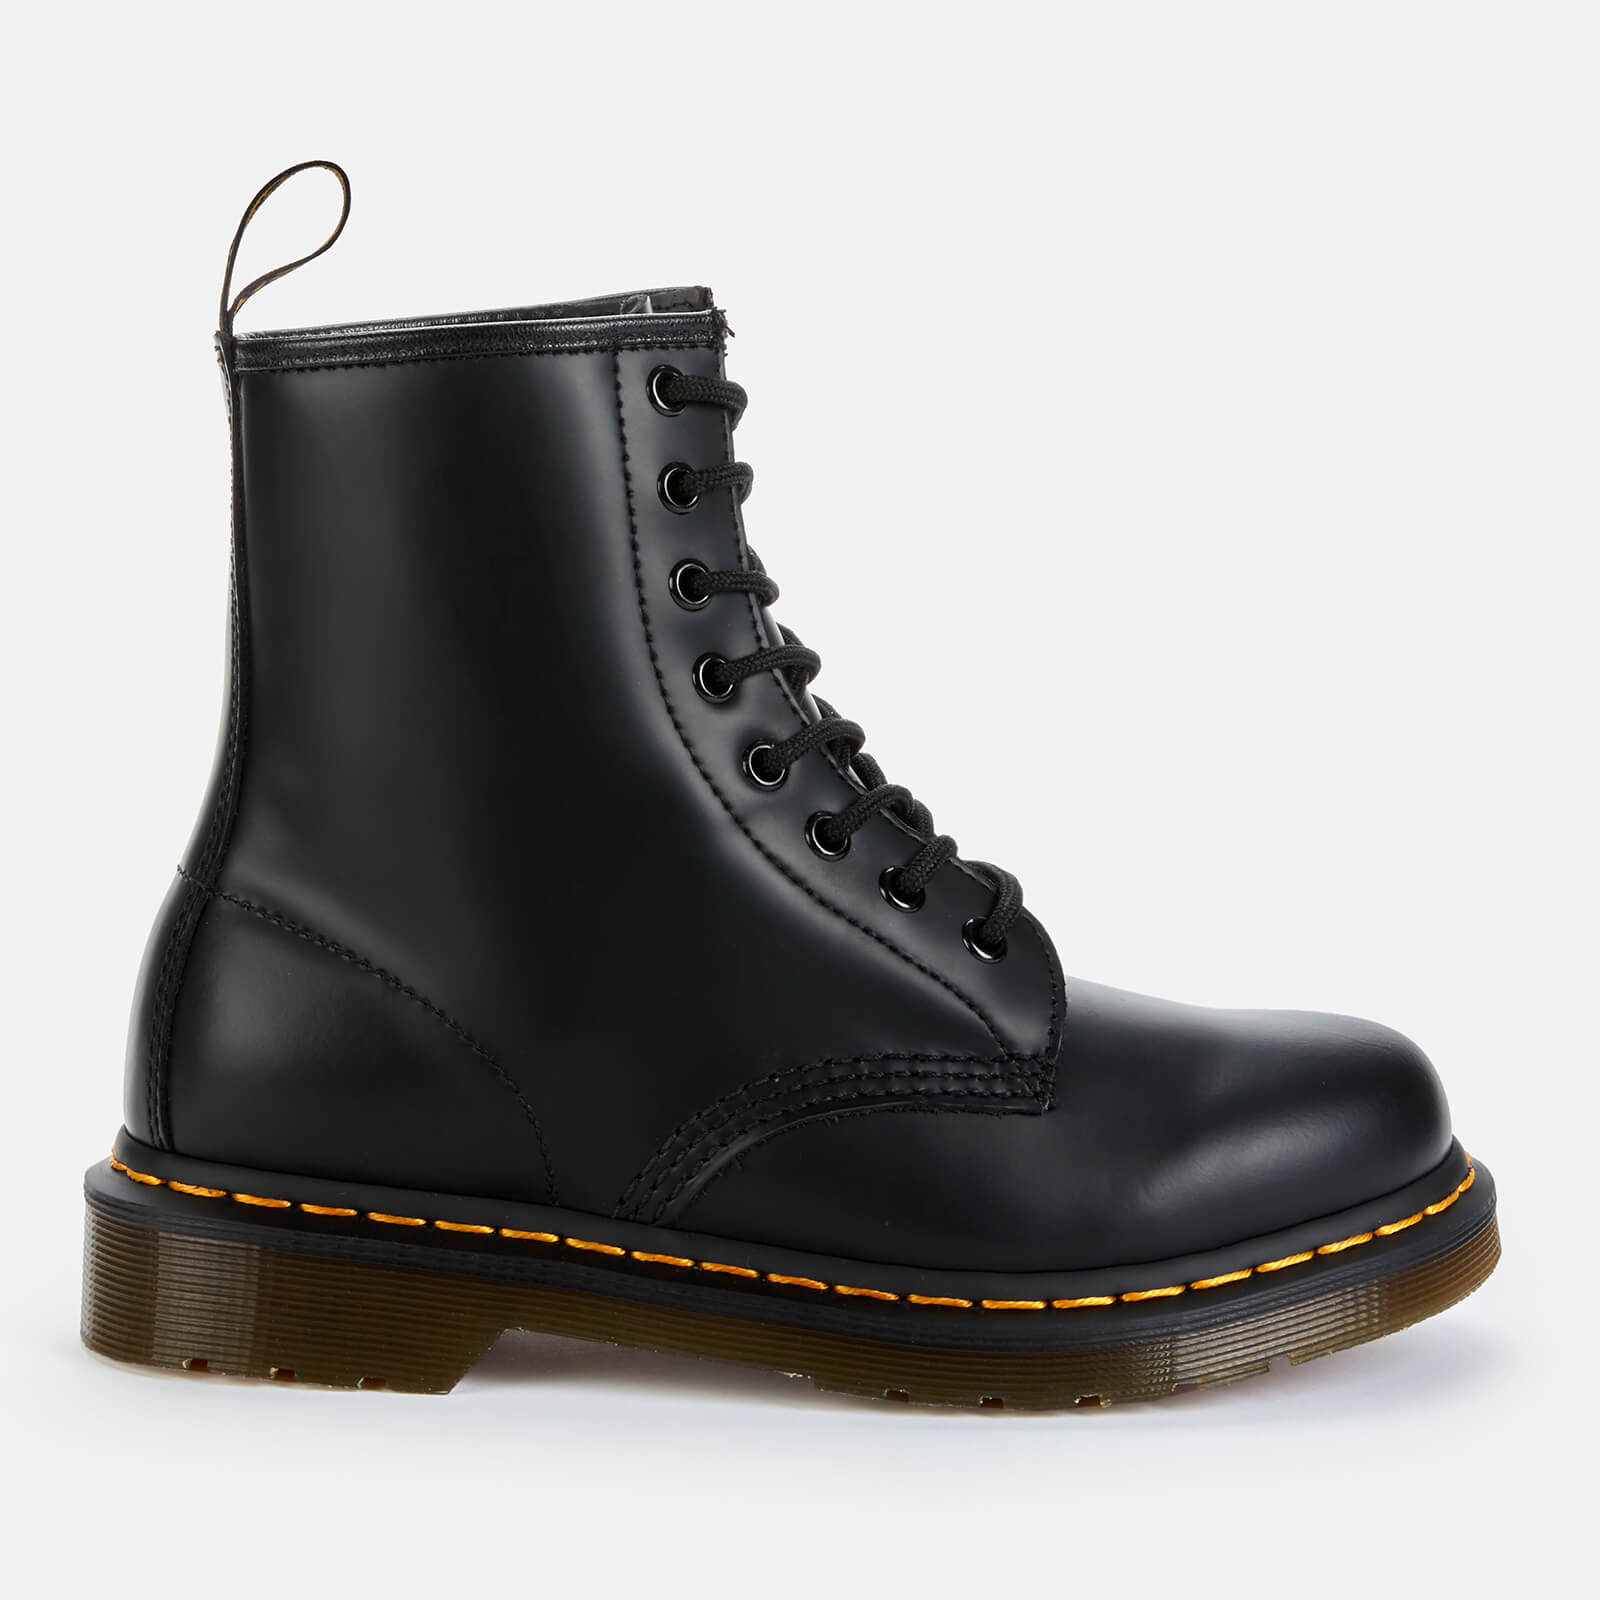 Dr. Martens 1460 Smooth Leather 8-Eye Boots - Black - UK 4